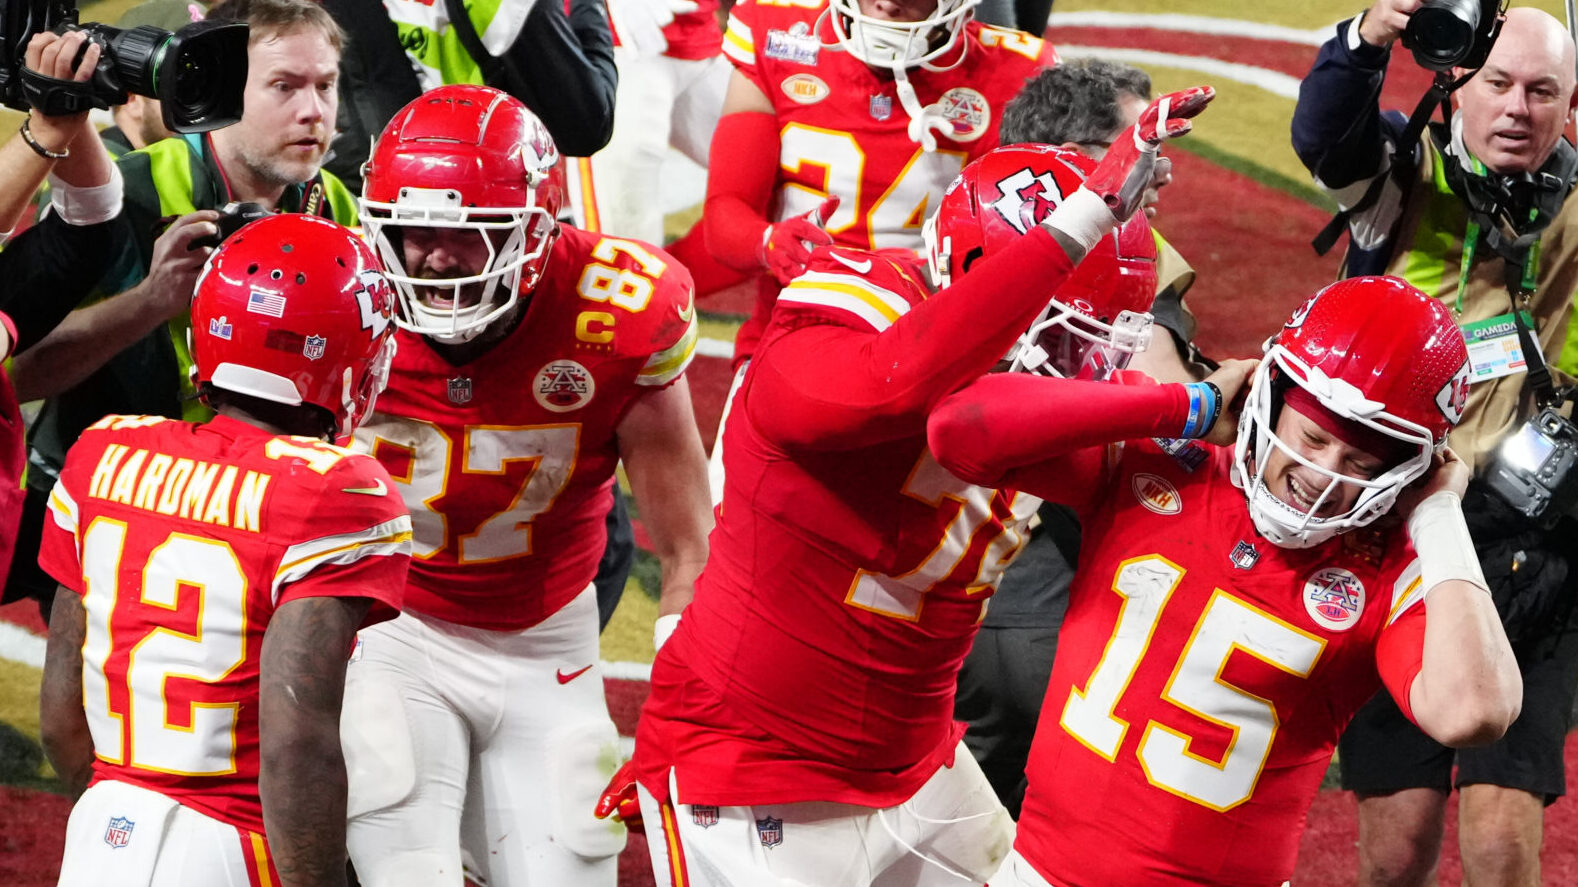 Chiefs players celebrate after Super Bowl winning touchdown